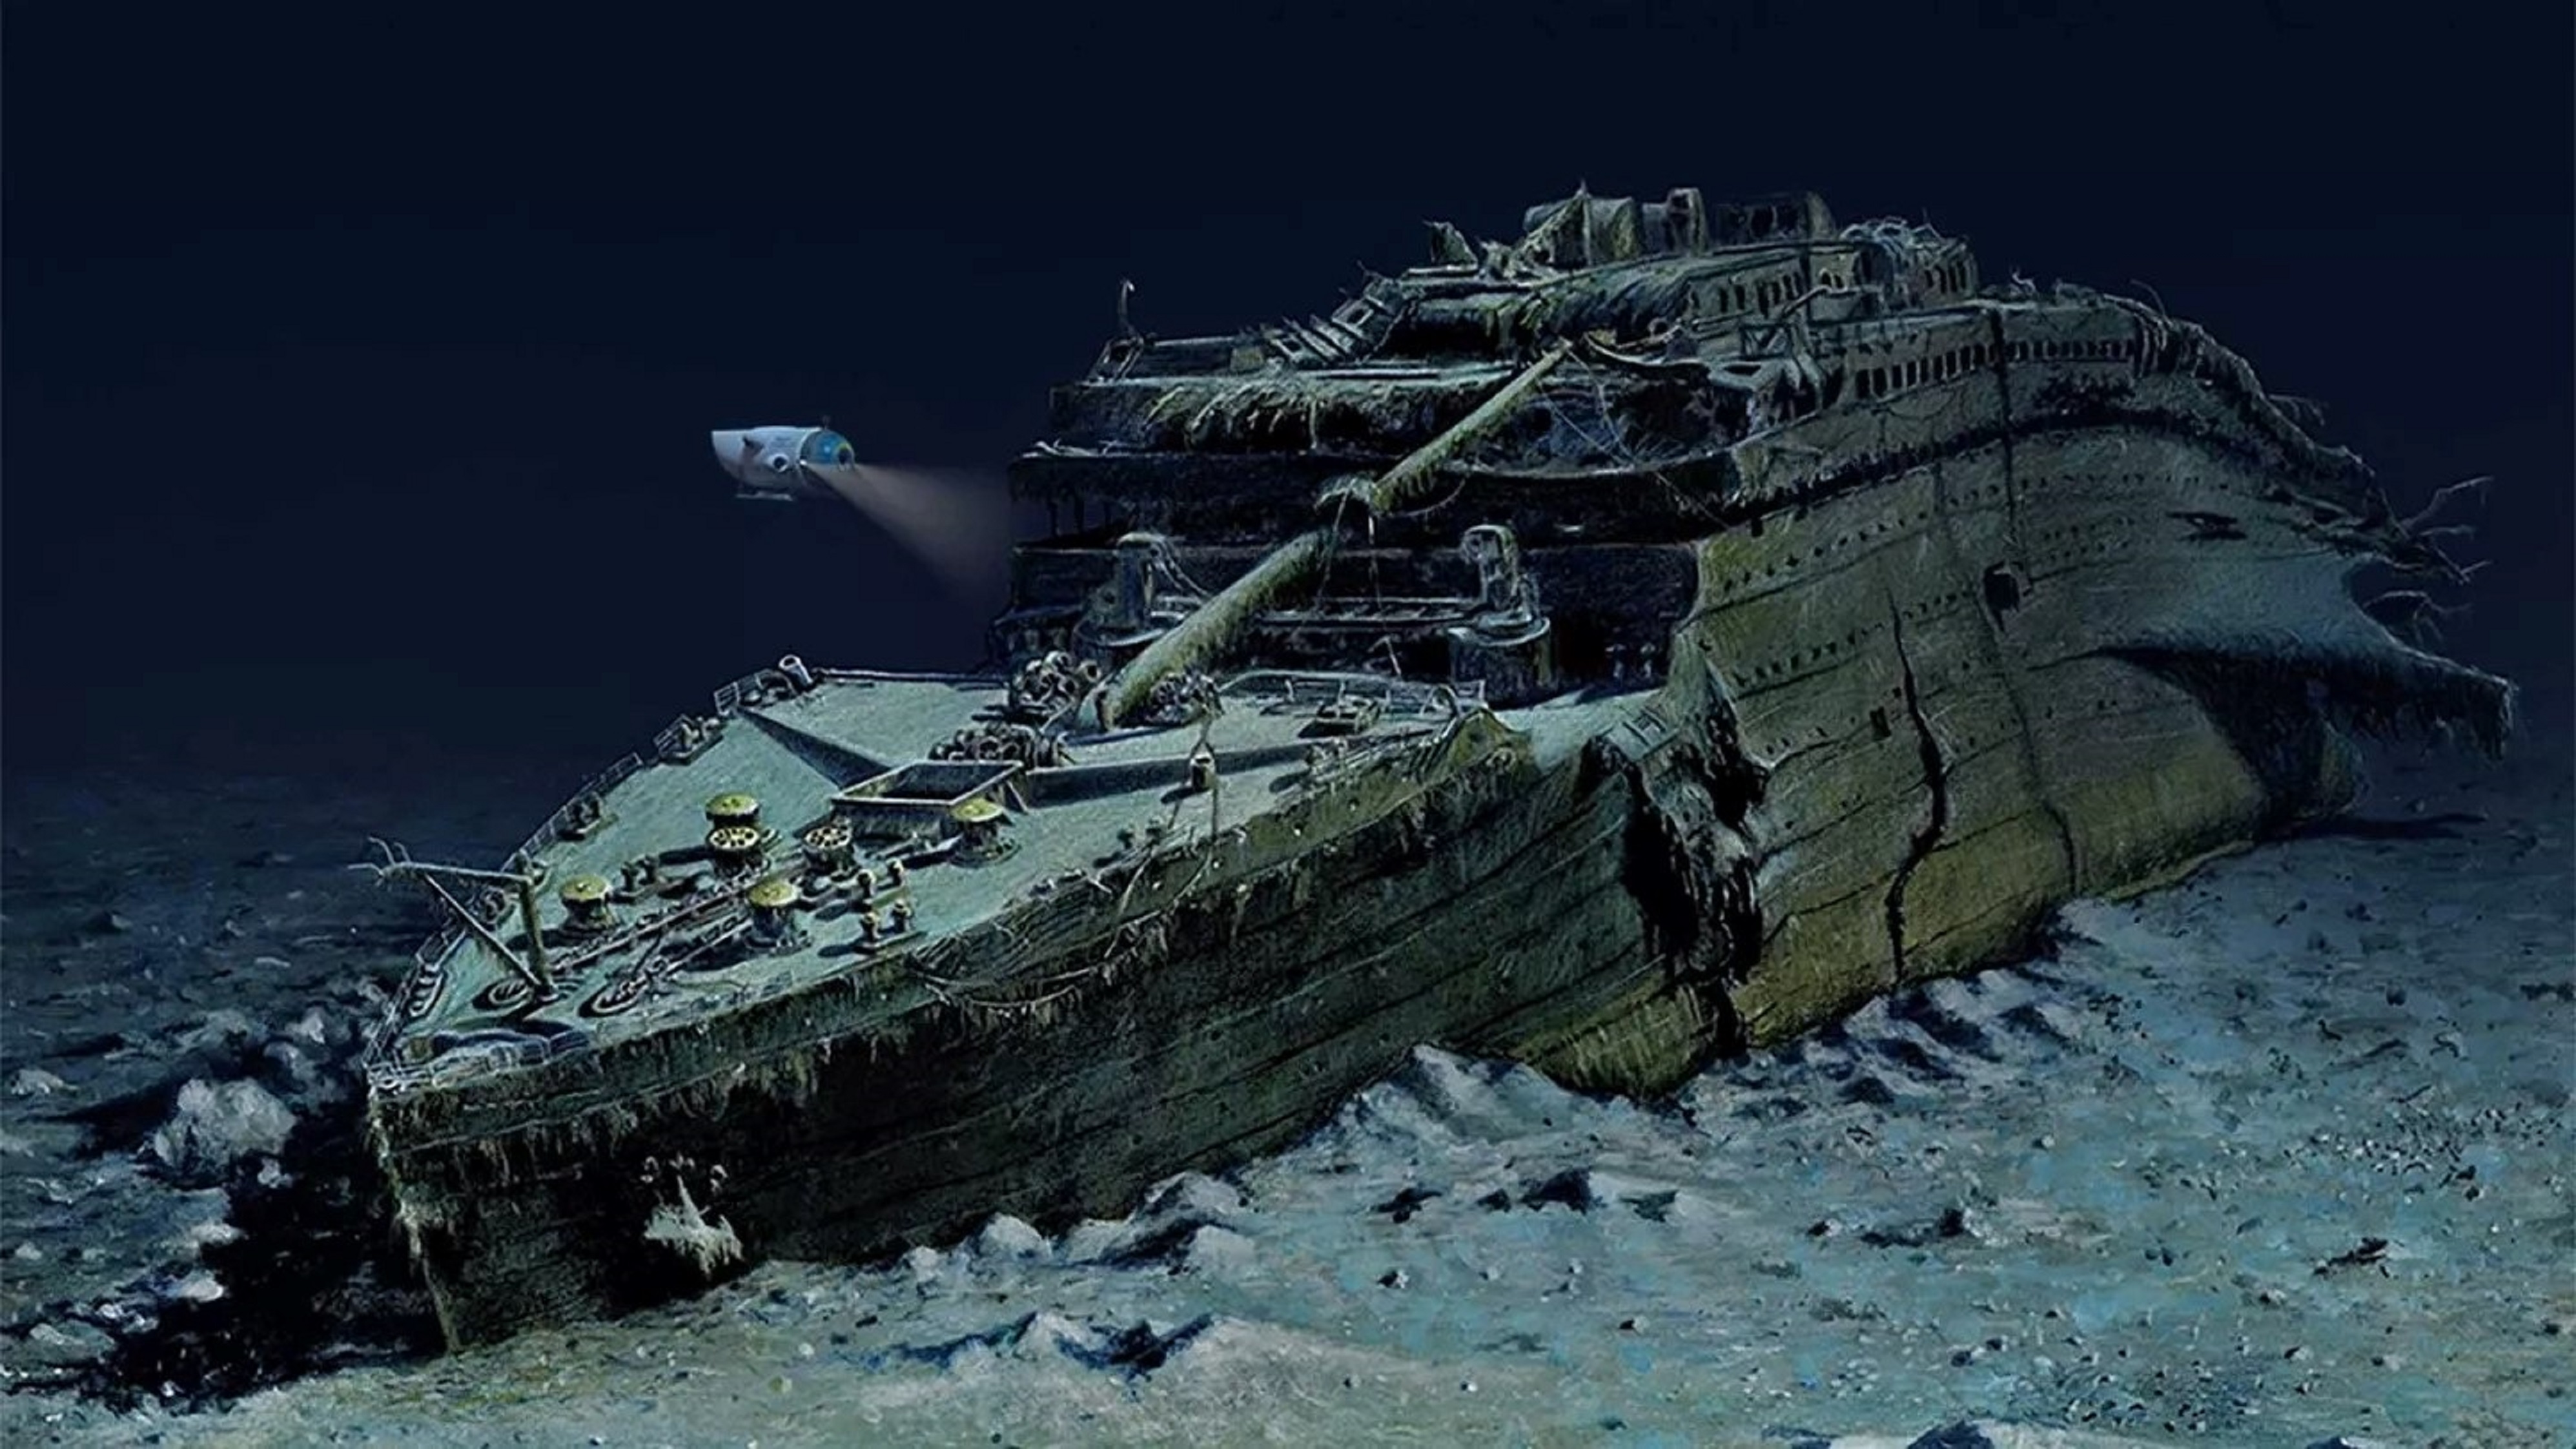 Покажи где затонул титаник. Затонувший Титаник 2020. Титаник 2022. Титаник затонувший 2021. Северная Атлантика место крушения Титаника.